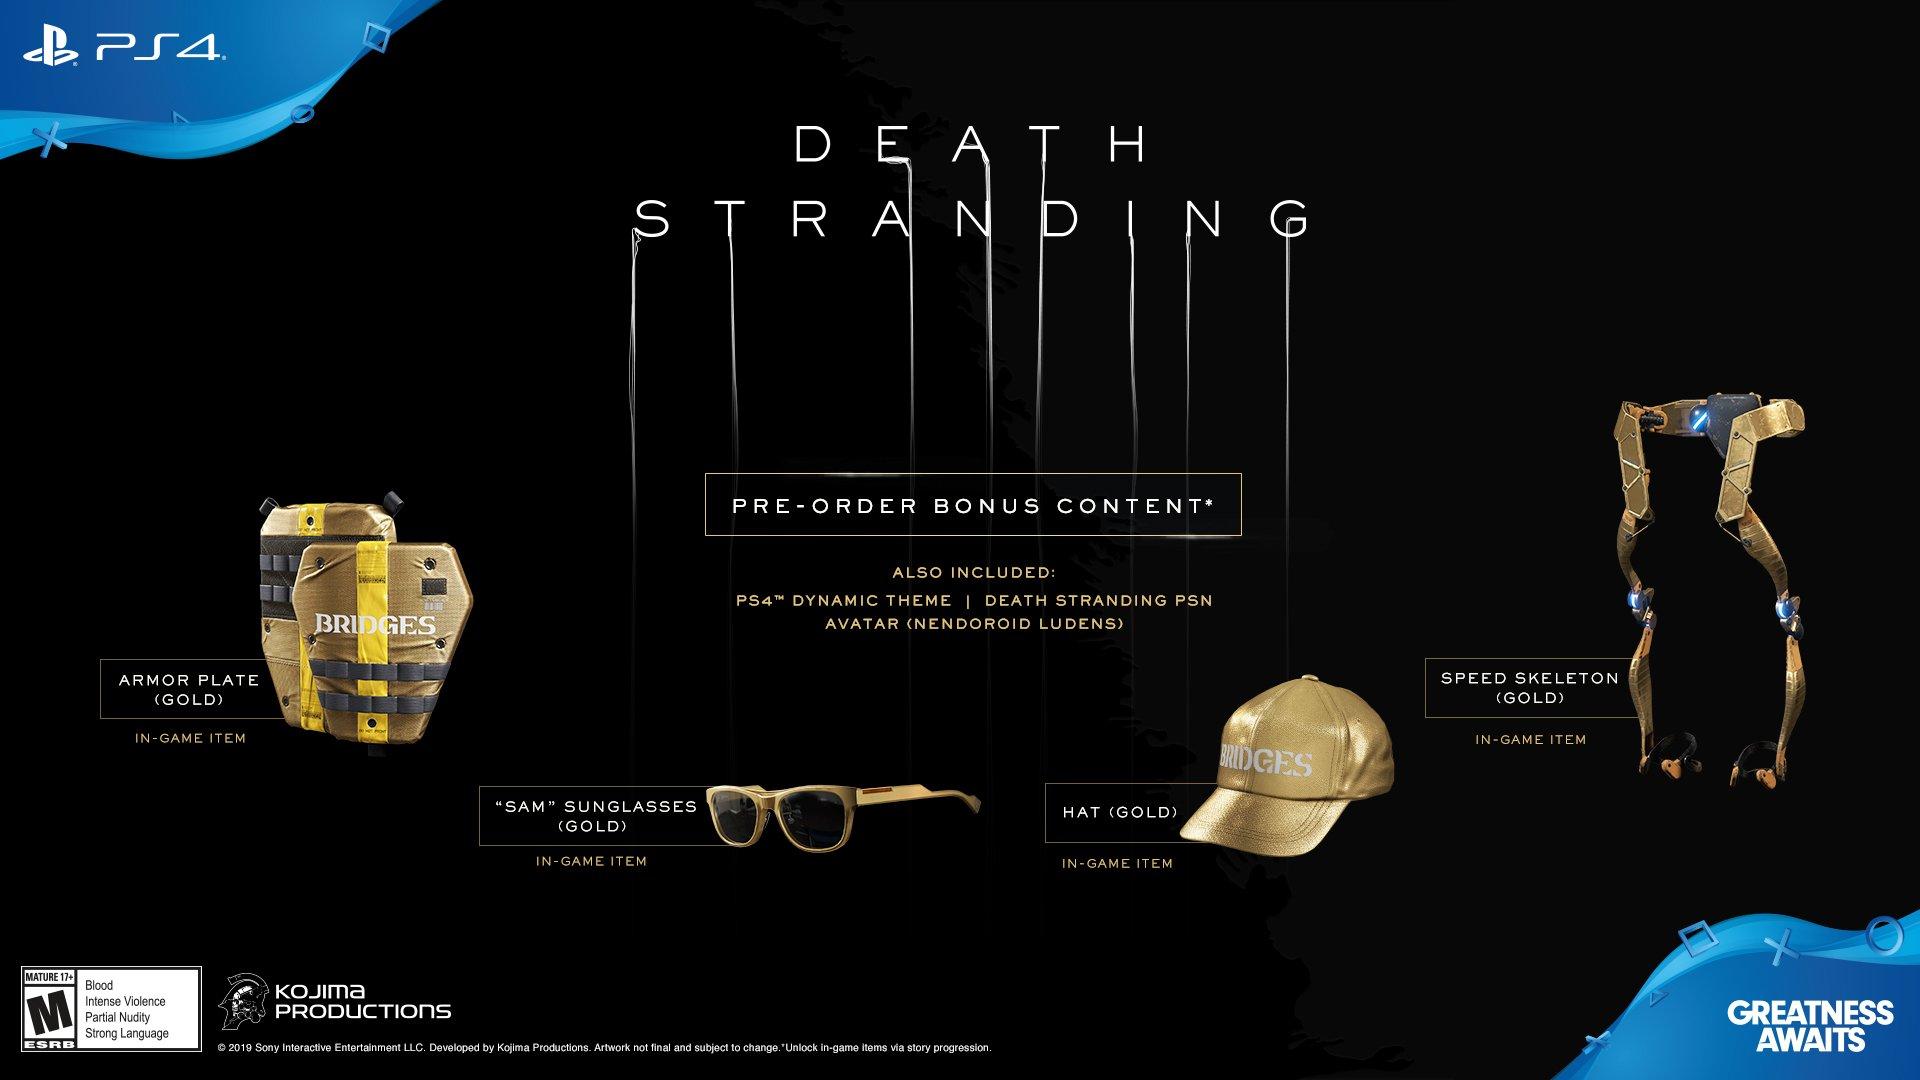 death stranding digital deluxe edition